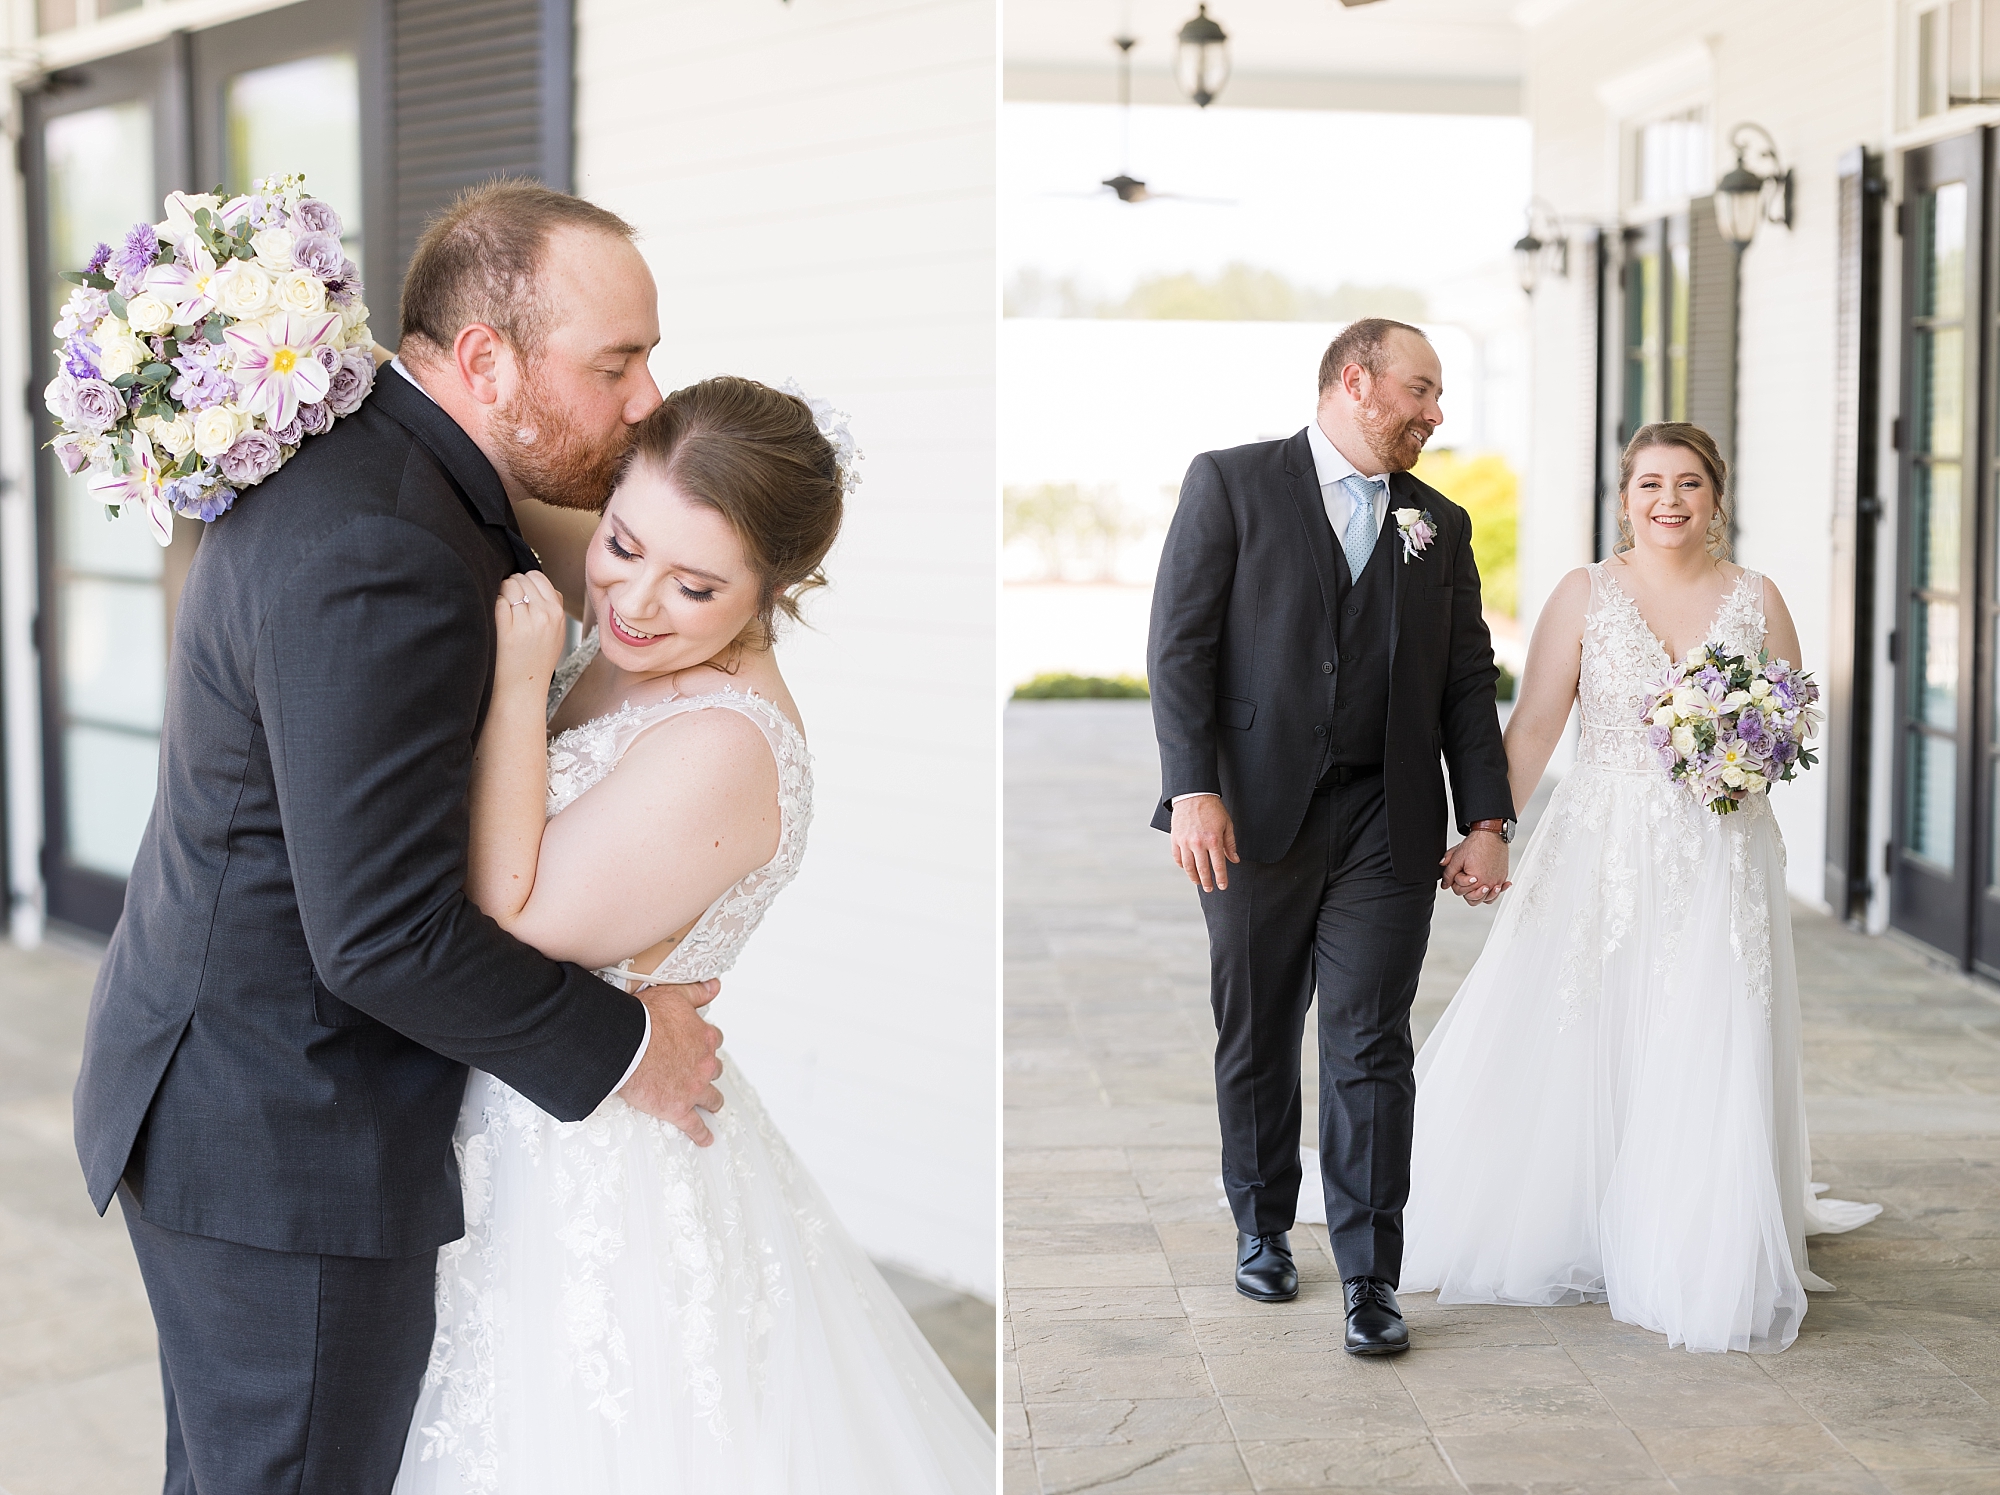 12 Oaks bride and groom - Raleigh NC Wedding Photographer - Sarah Hinckley Photography